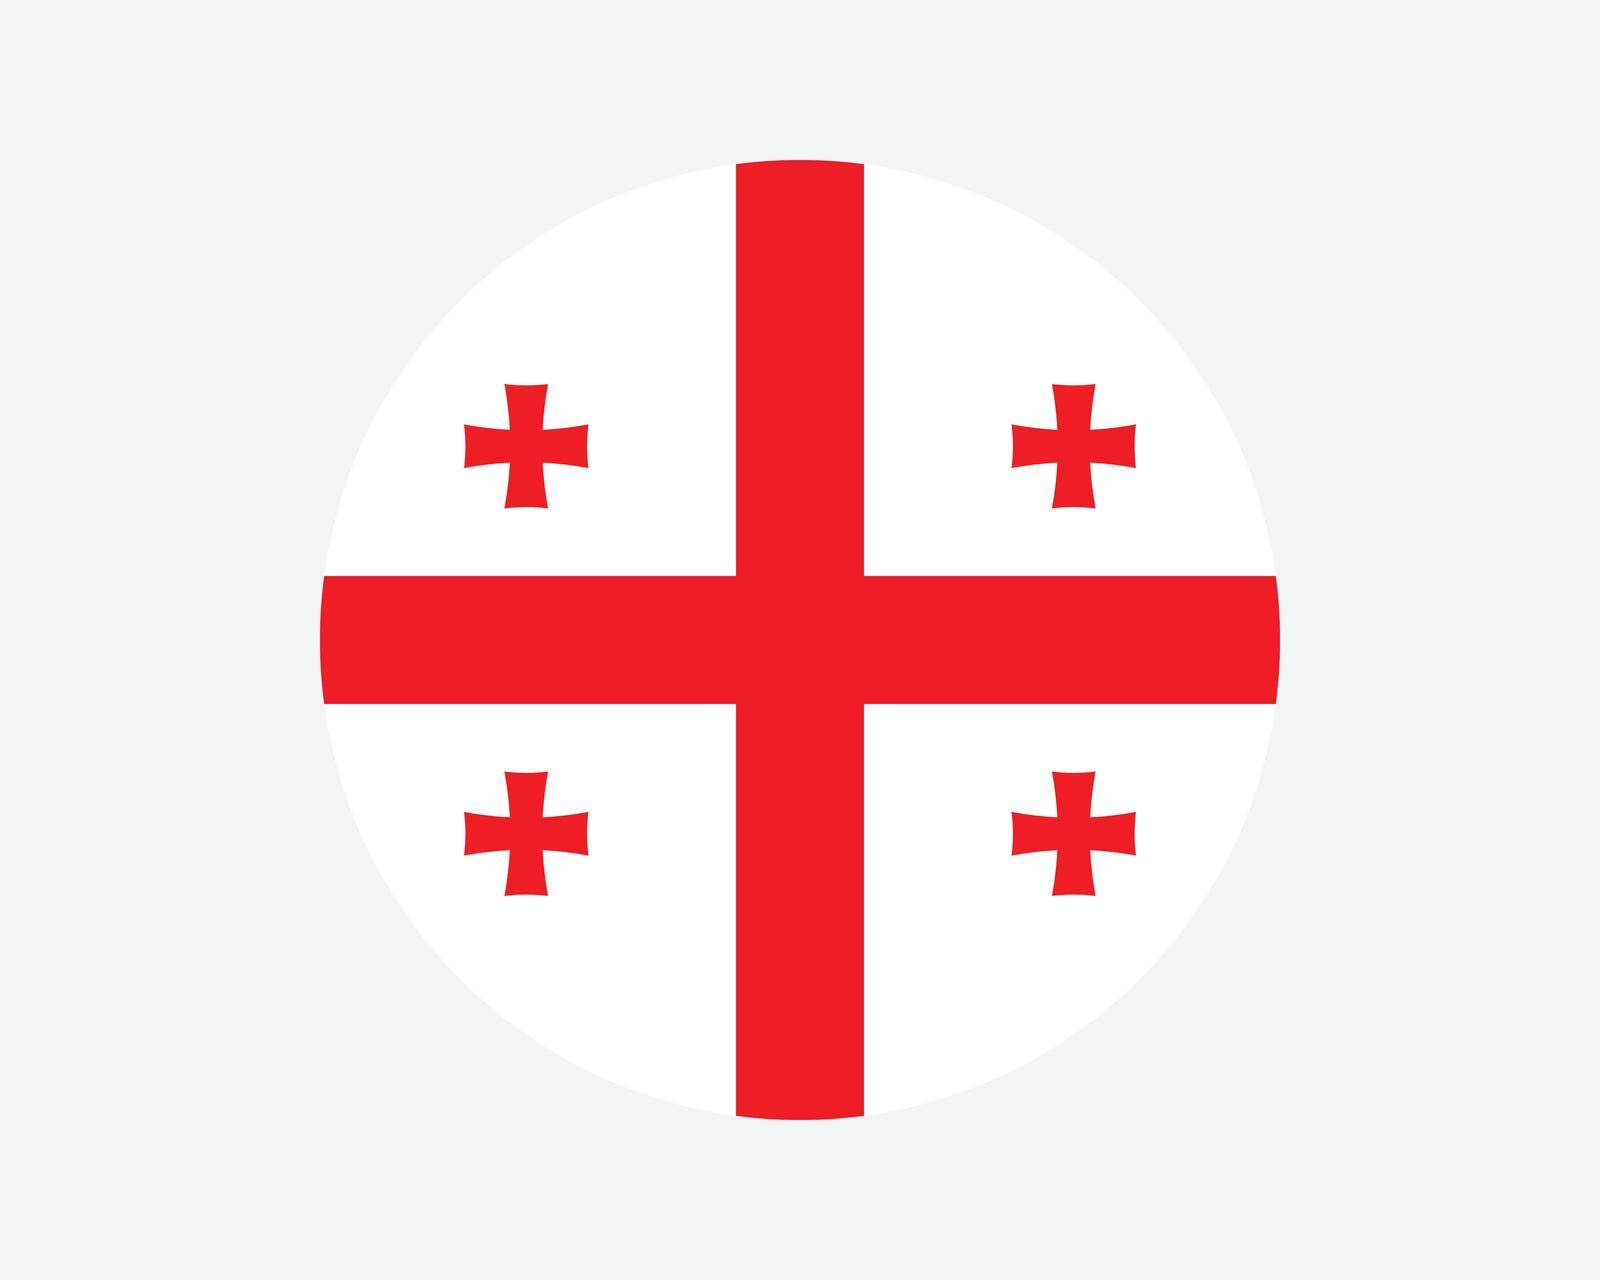 Georgia Round Country Flag. Georgian Circle National Flag. Georgia Circular Shape Button Banner. EPS Vector Illustration.